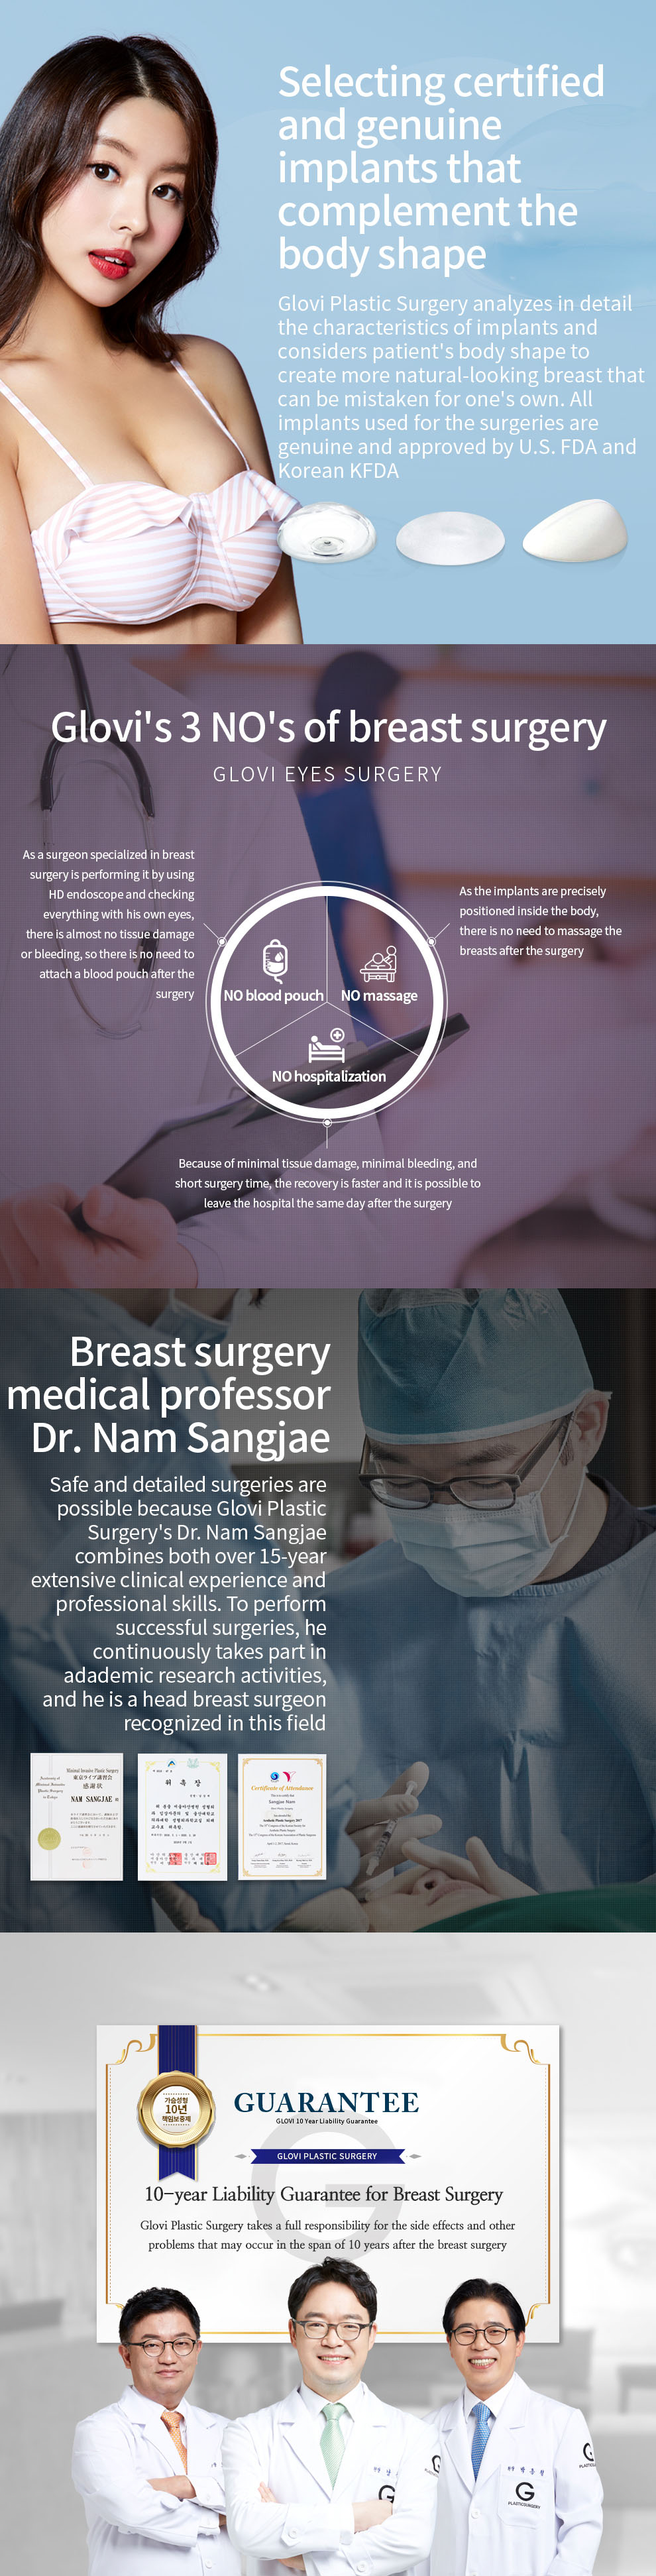 Glovi breast surgery img